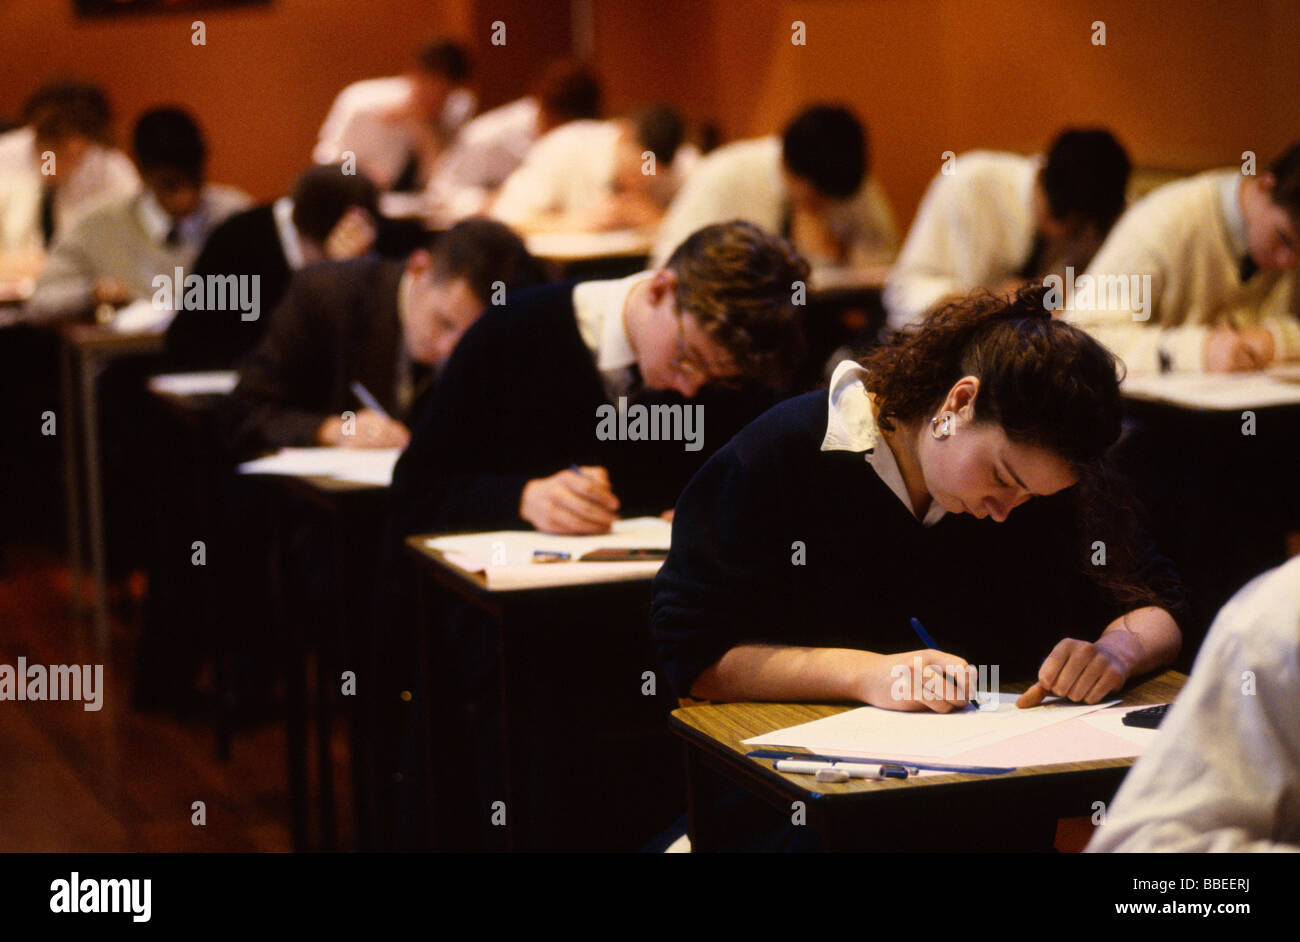 england-education-secondary-school-exams